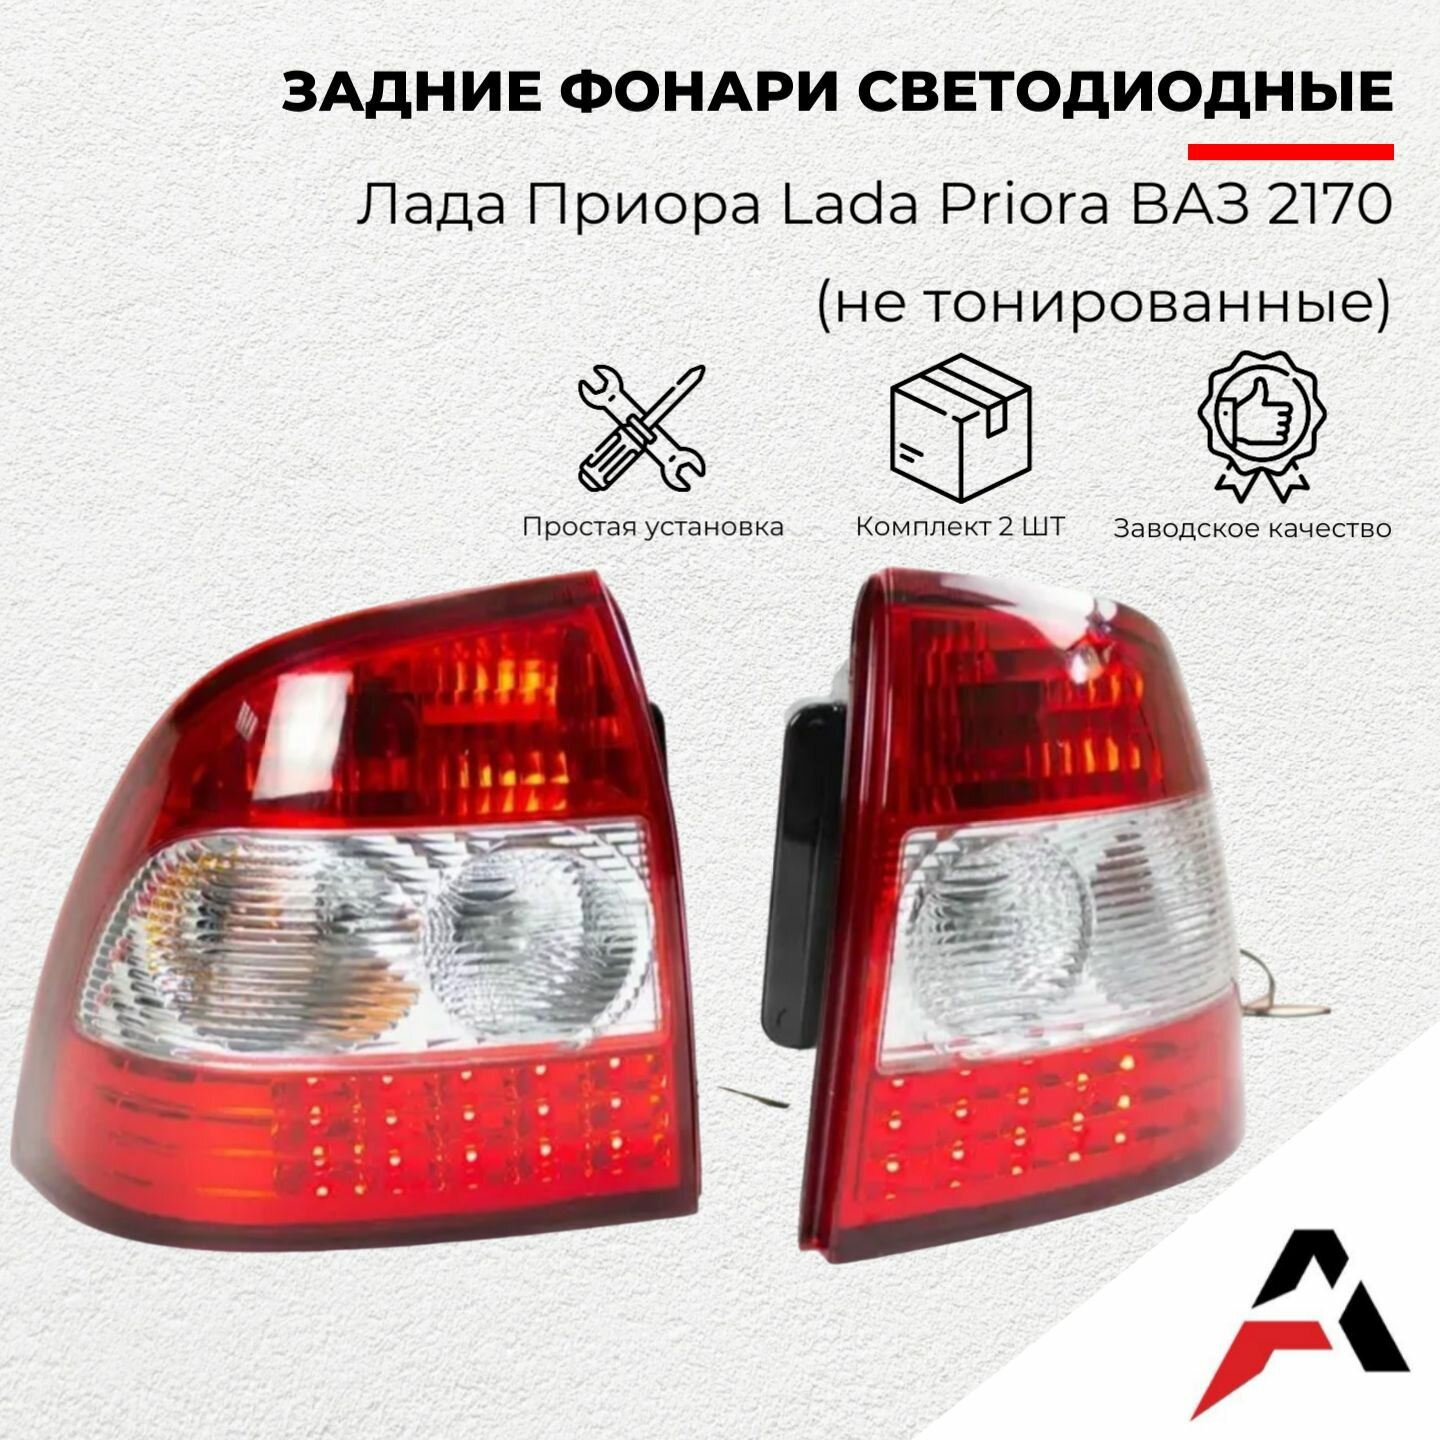 Задние фонари светодиодные на Лада Приора Lada Priora ВАЗ 2170 комплект 2шт.